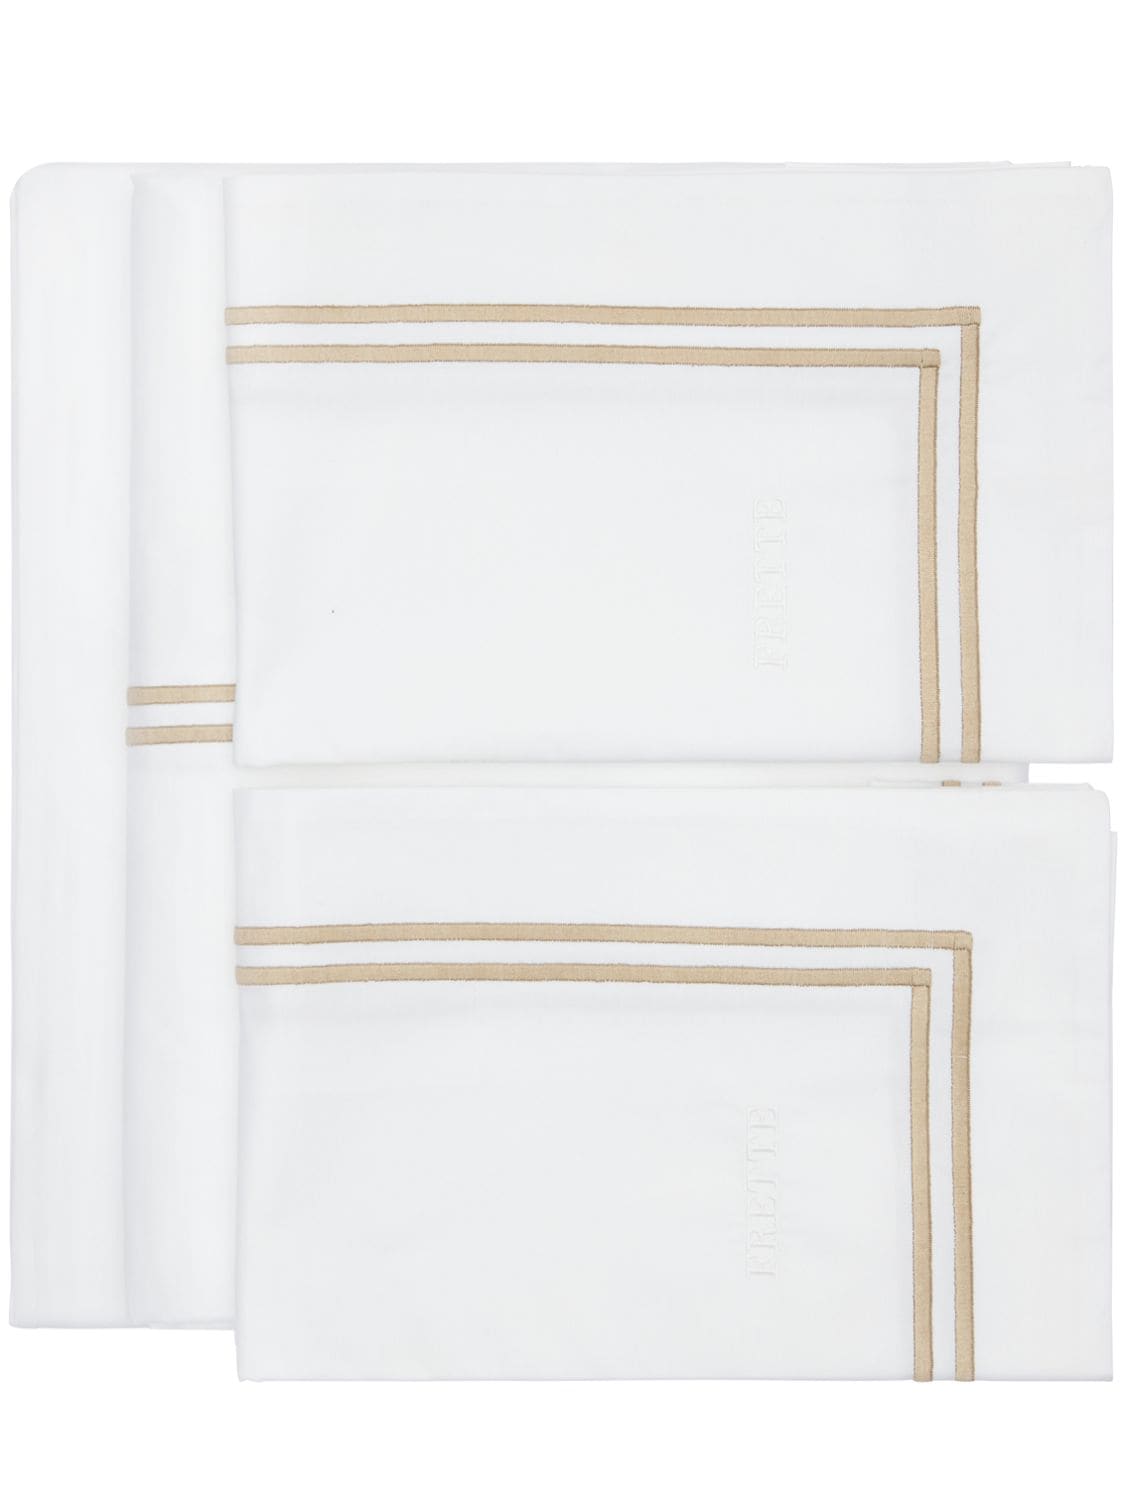 Frette Hotel Classic Cotton Percale Duvet Set In White,khaki